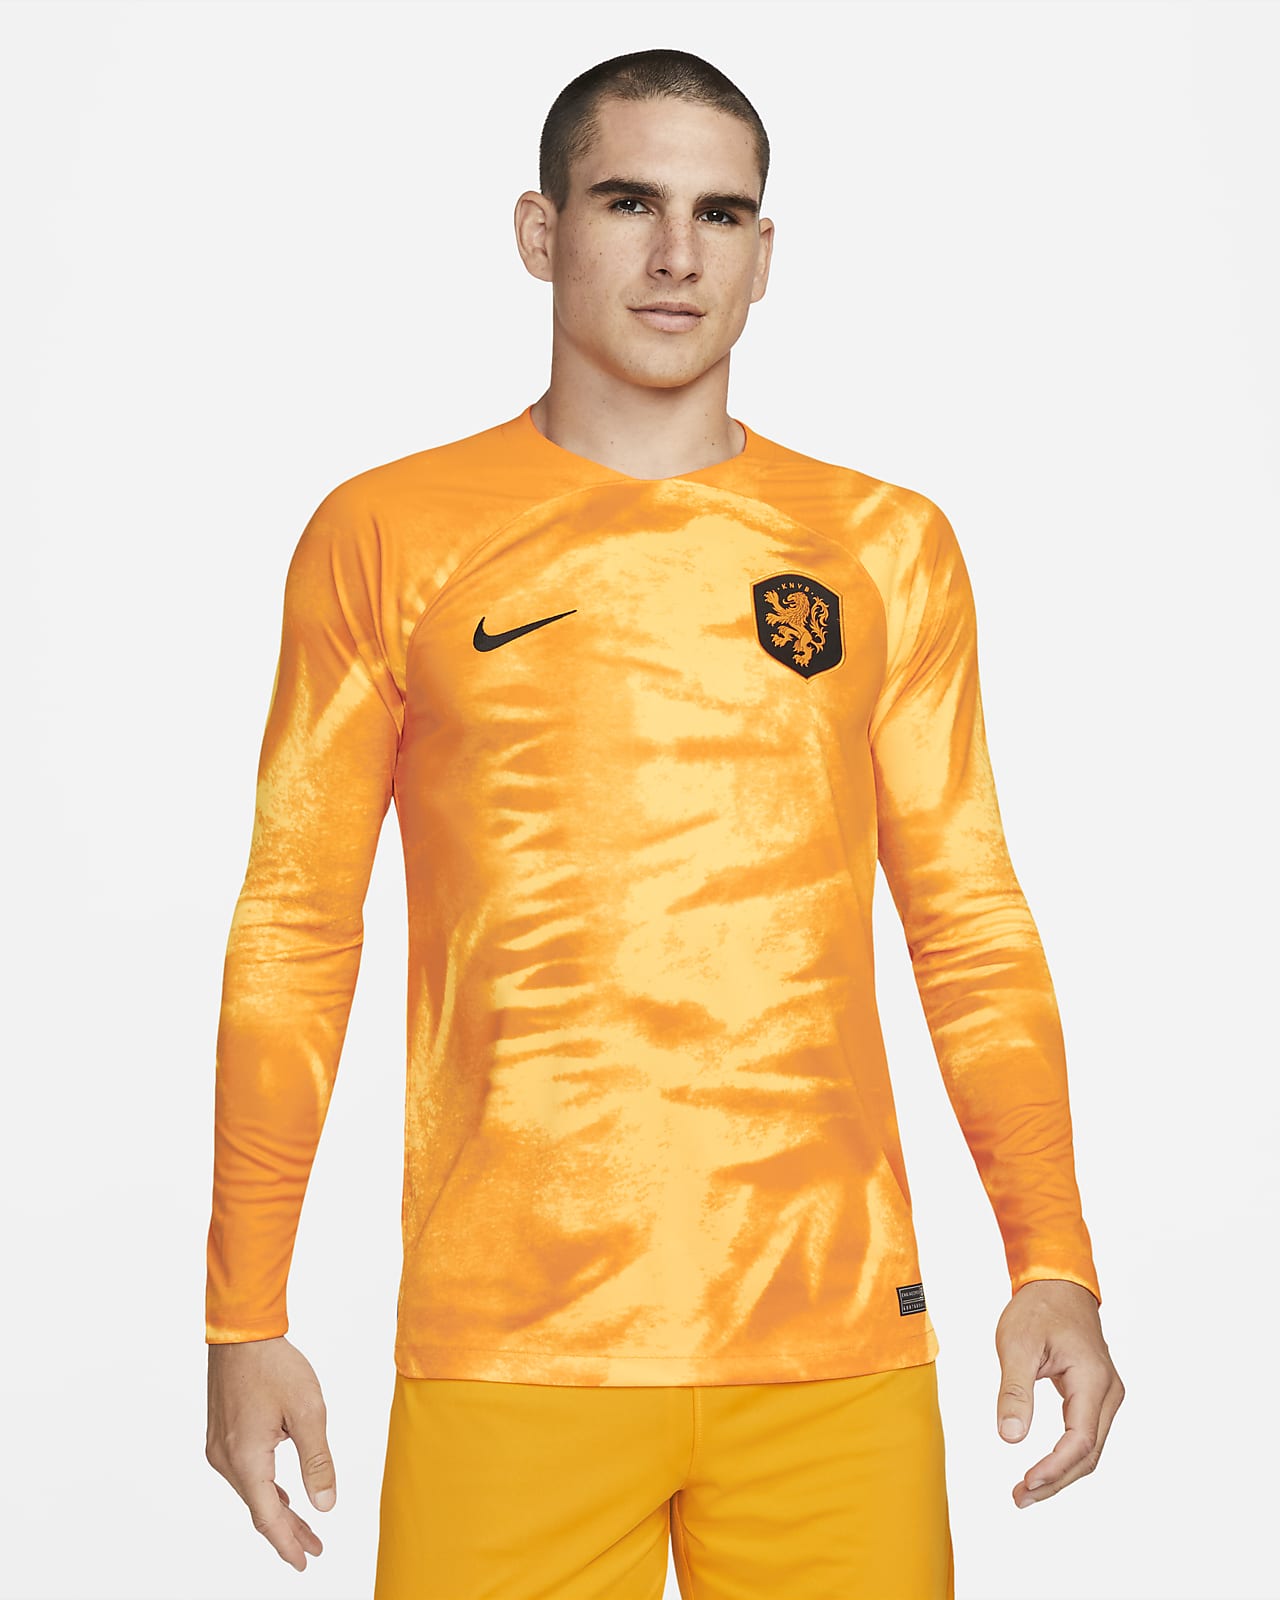 orange soccer shirt